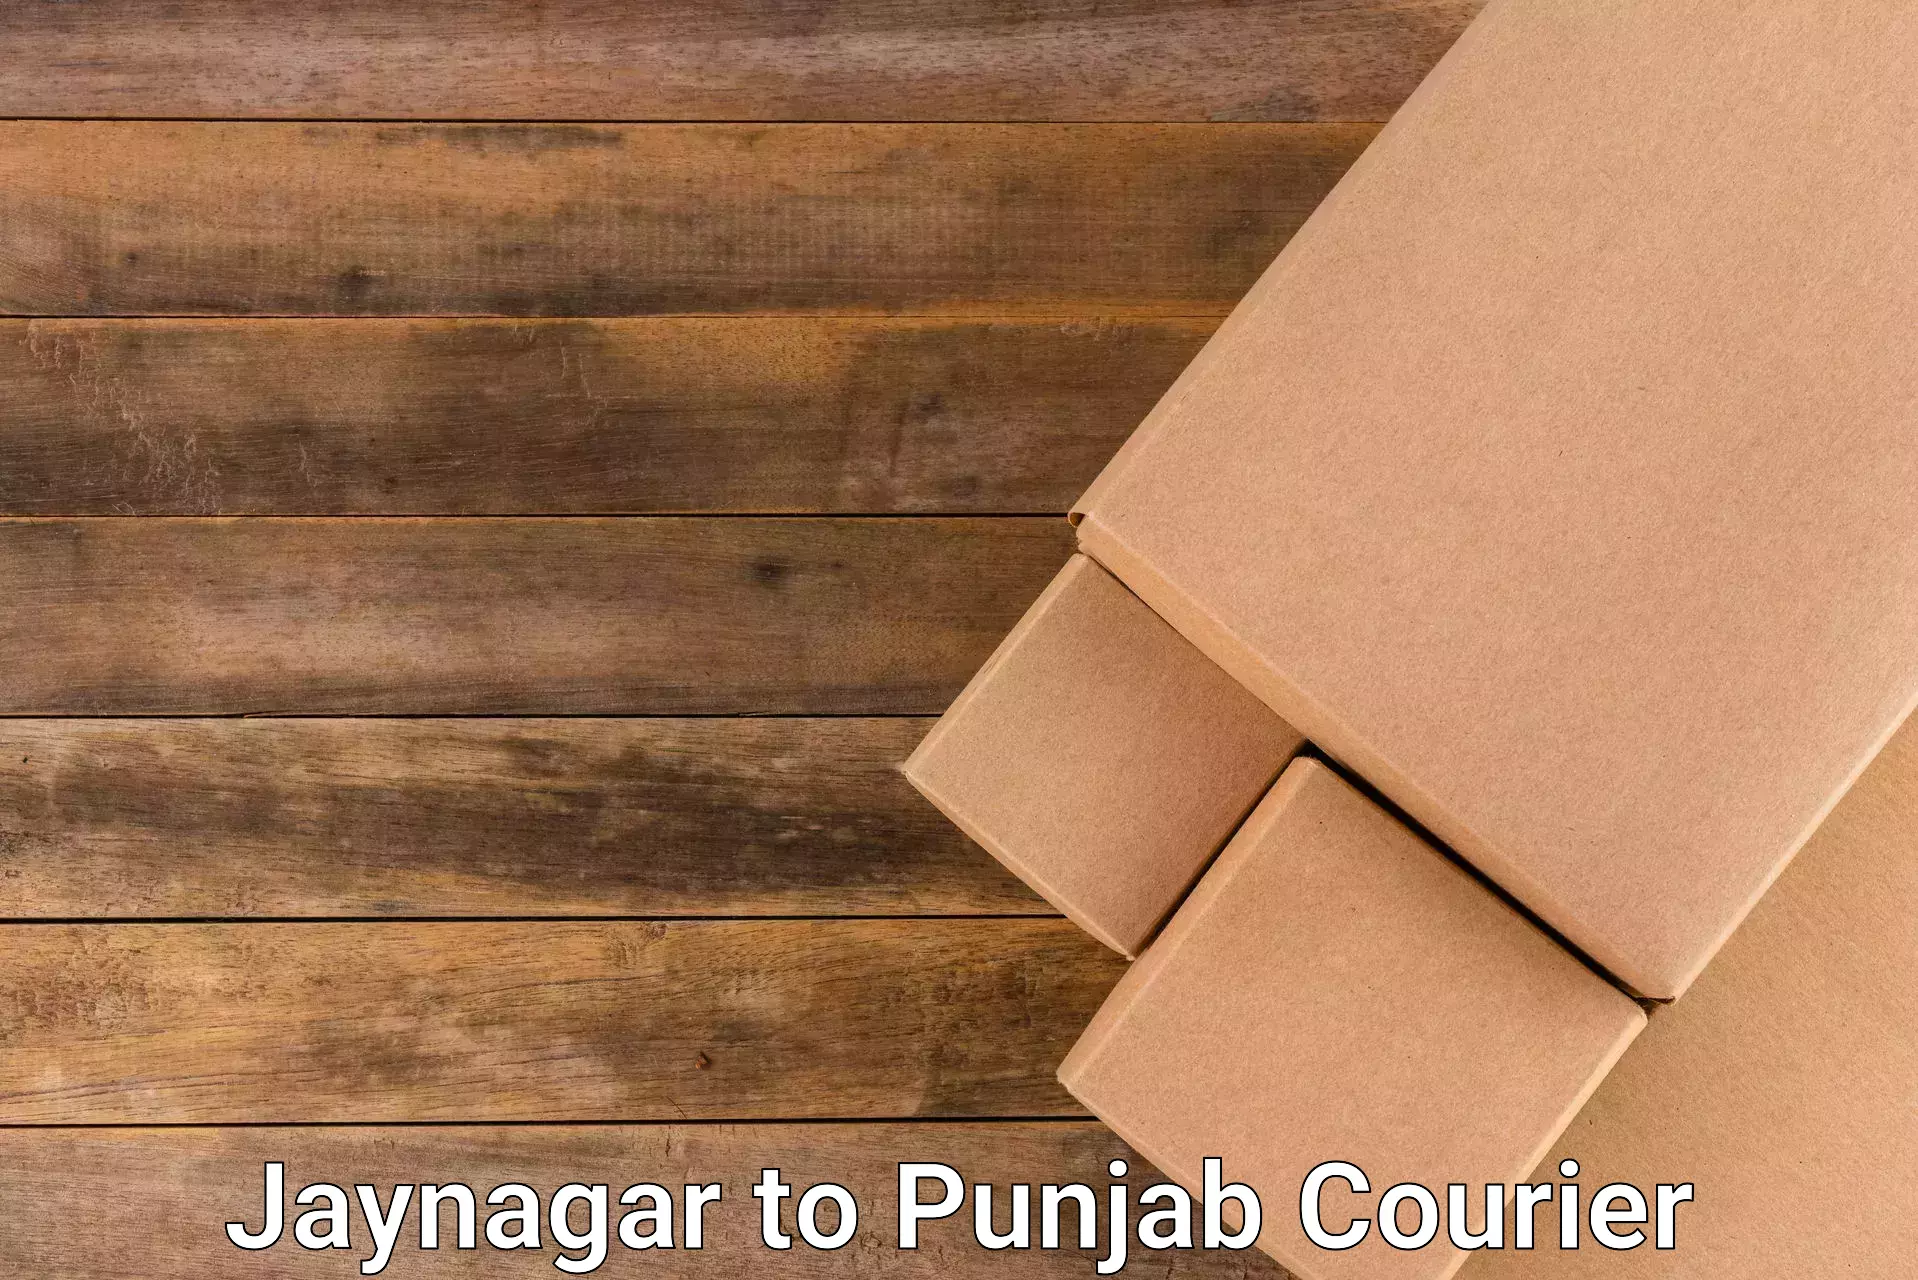 User-friendly delivery service Jaynagar to Talwara